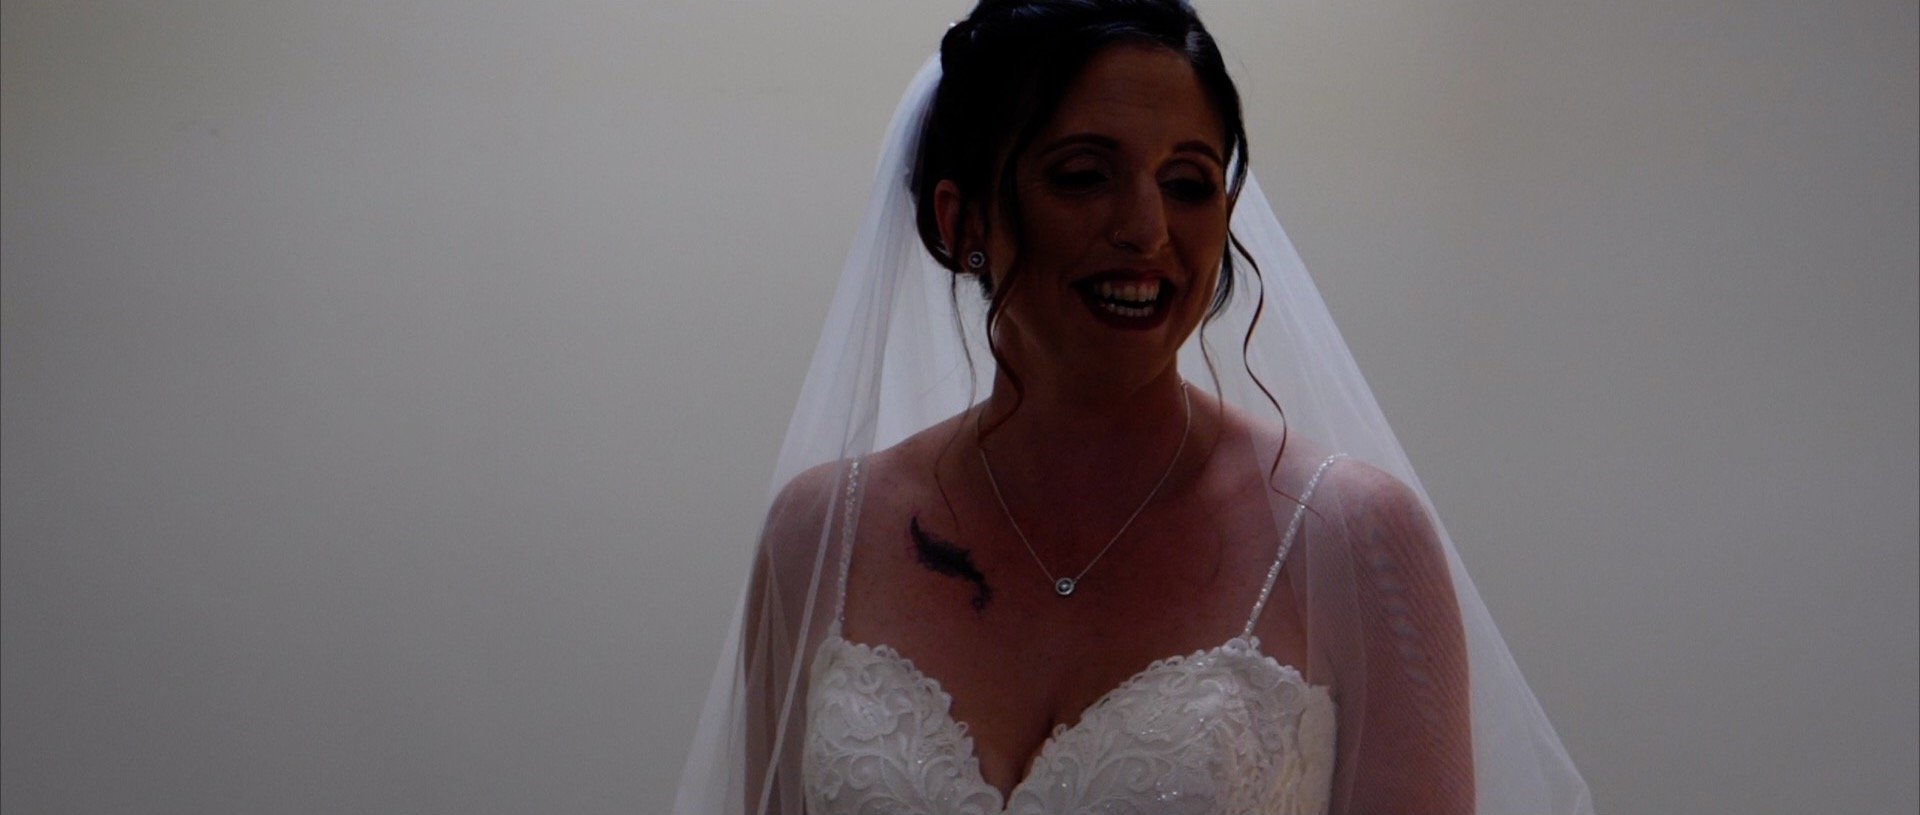 Beautiful Bride wedding videos Essex.jpg